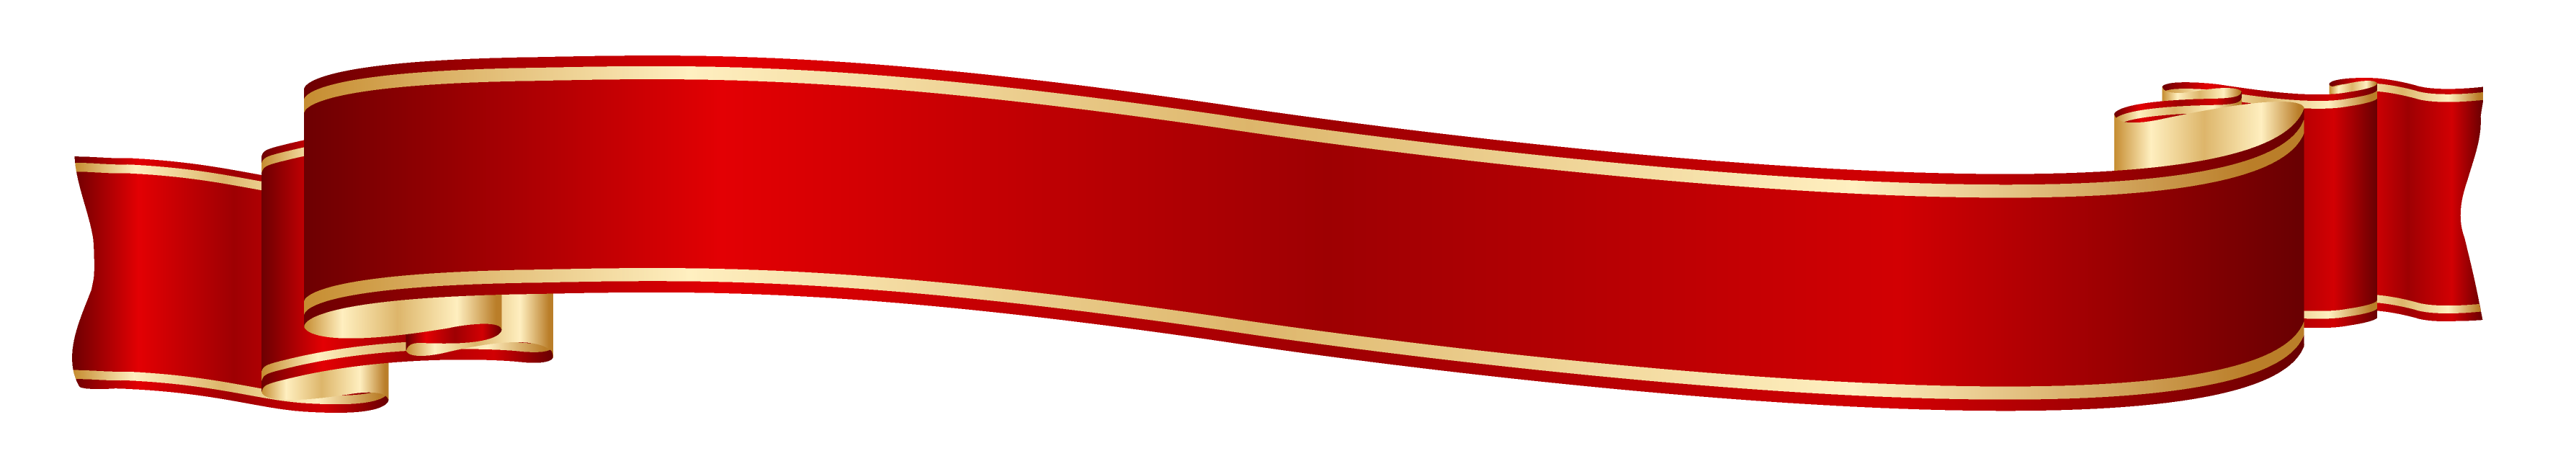 Image de PNG ruban rouge